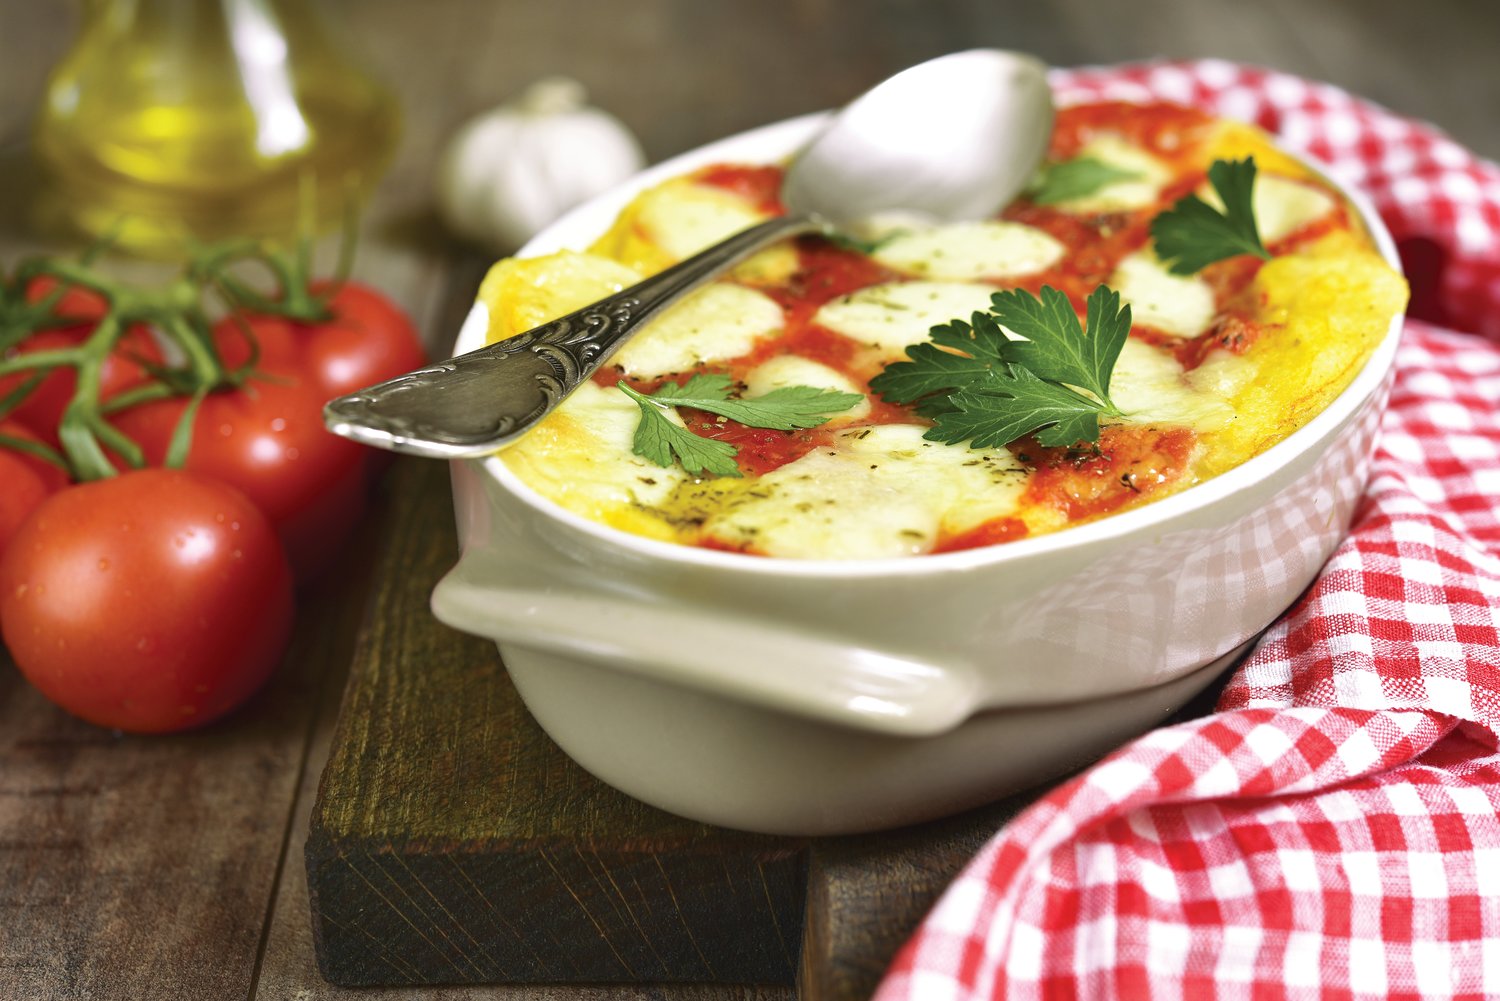 This cheesy polenta back includes both mozzarella and Parmesan cheese.